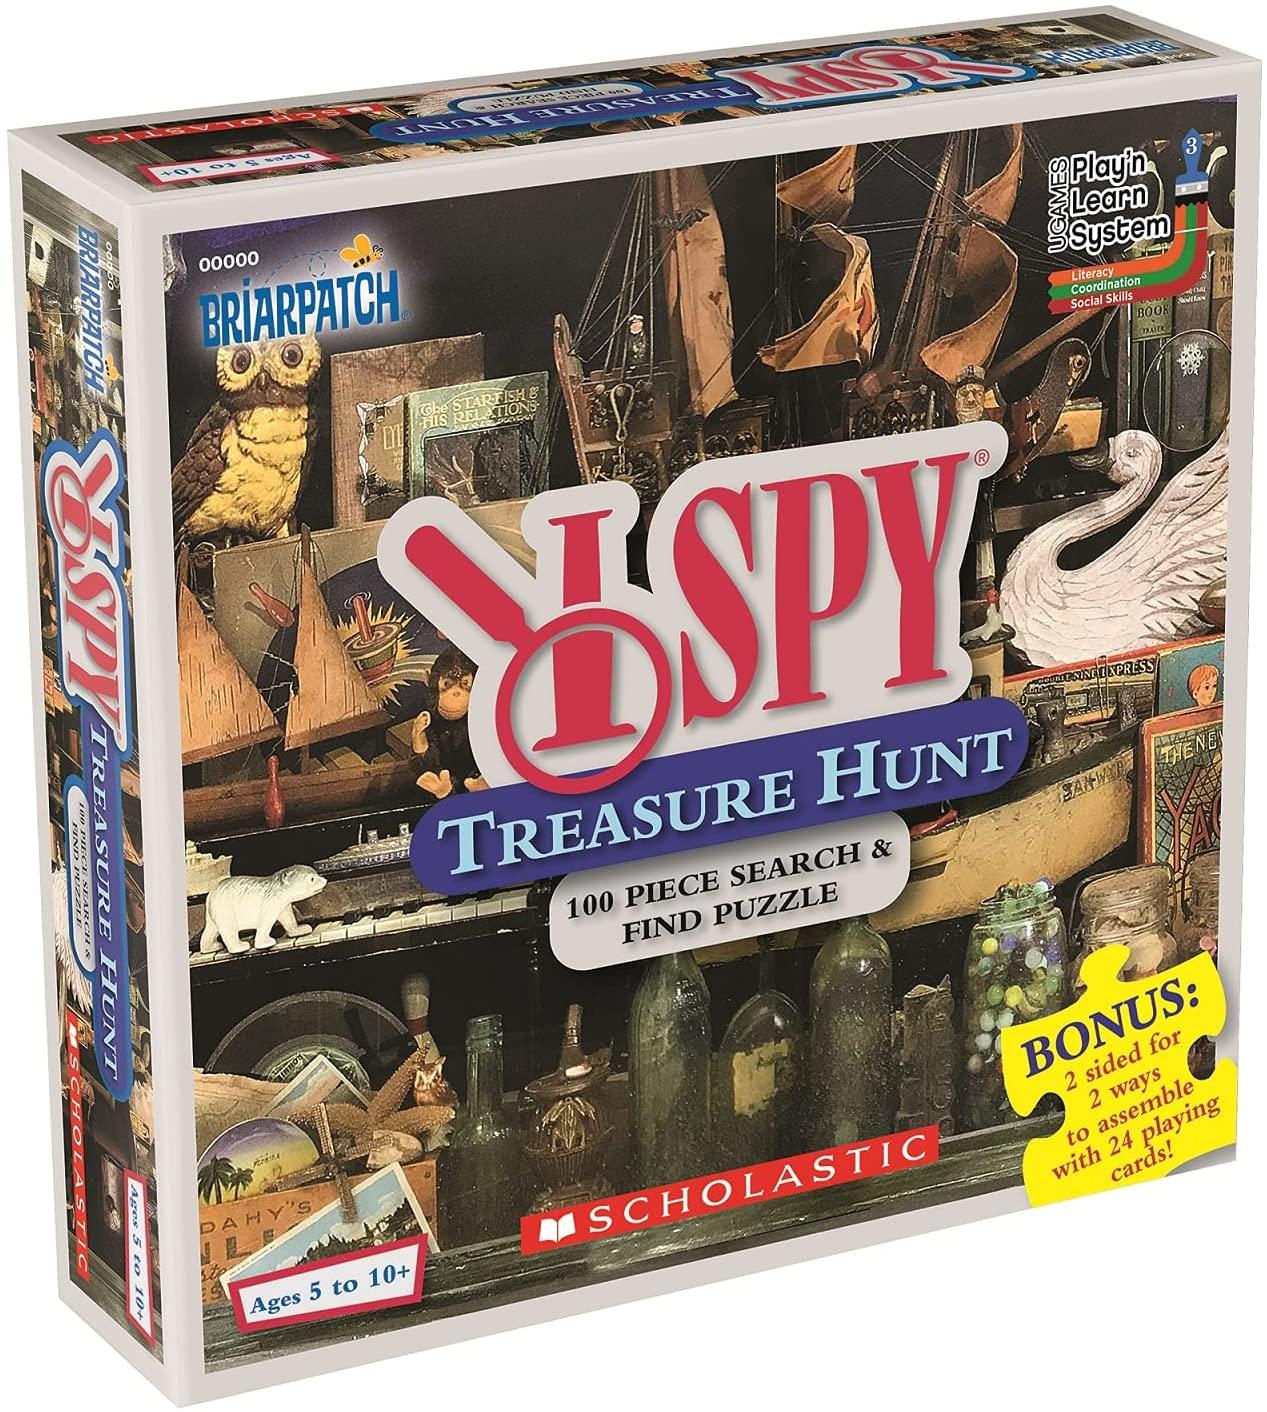 I Spy Treasure Hunt 100 Piece Jigsaw Puzzle